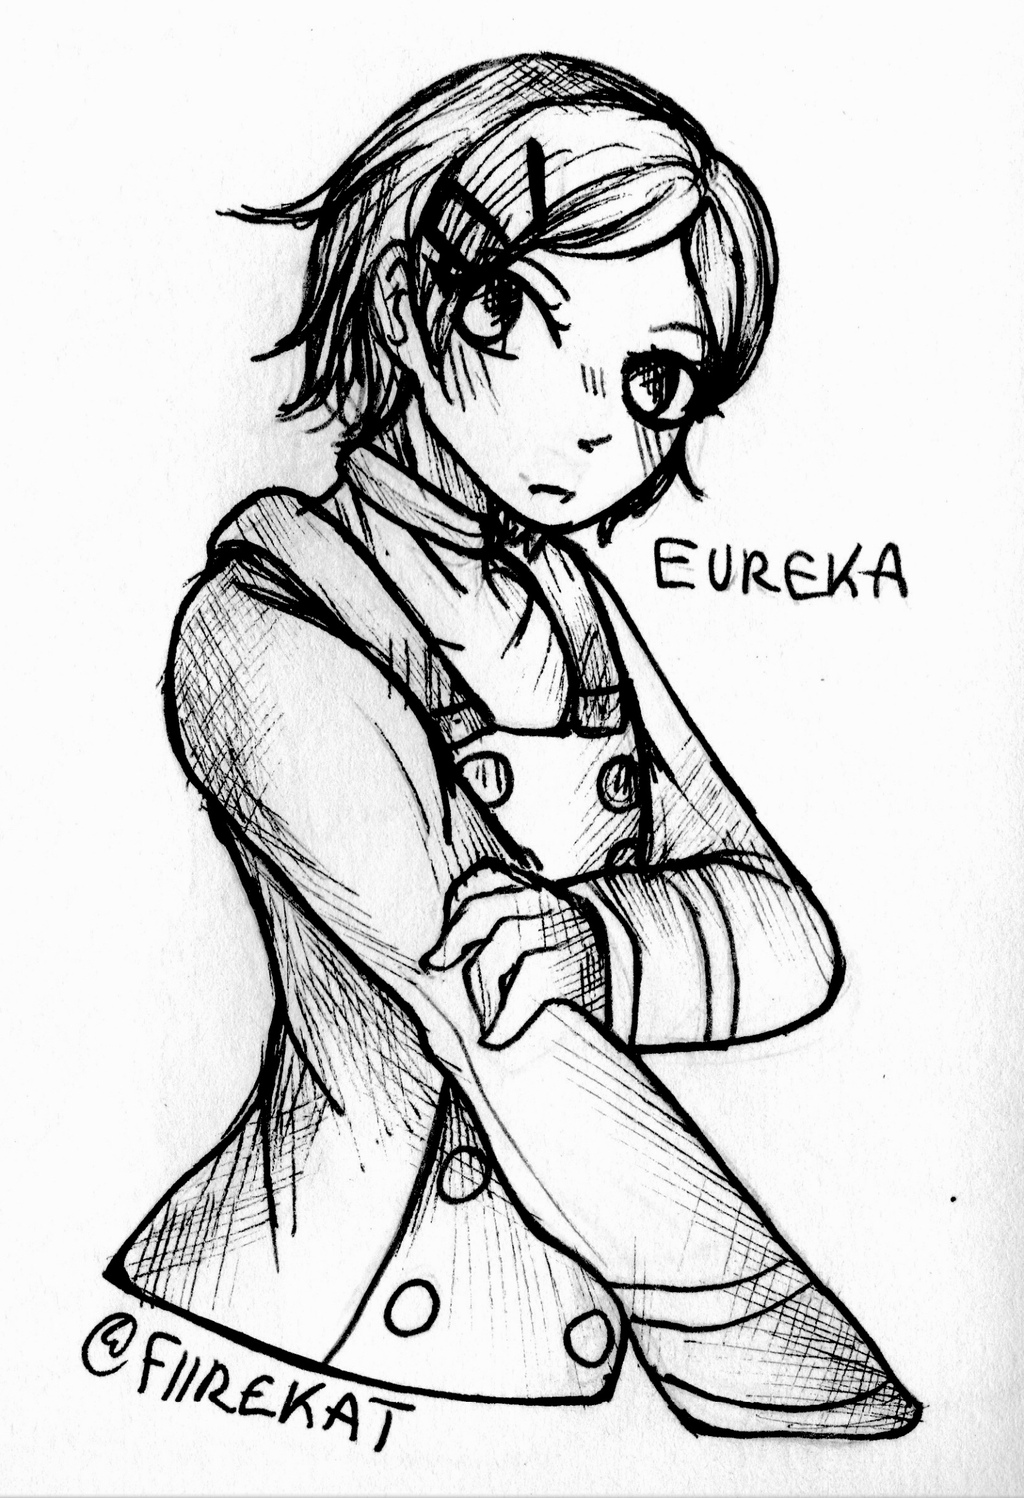 Eureka